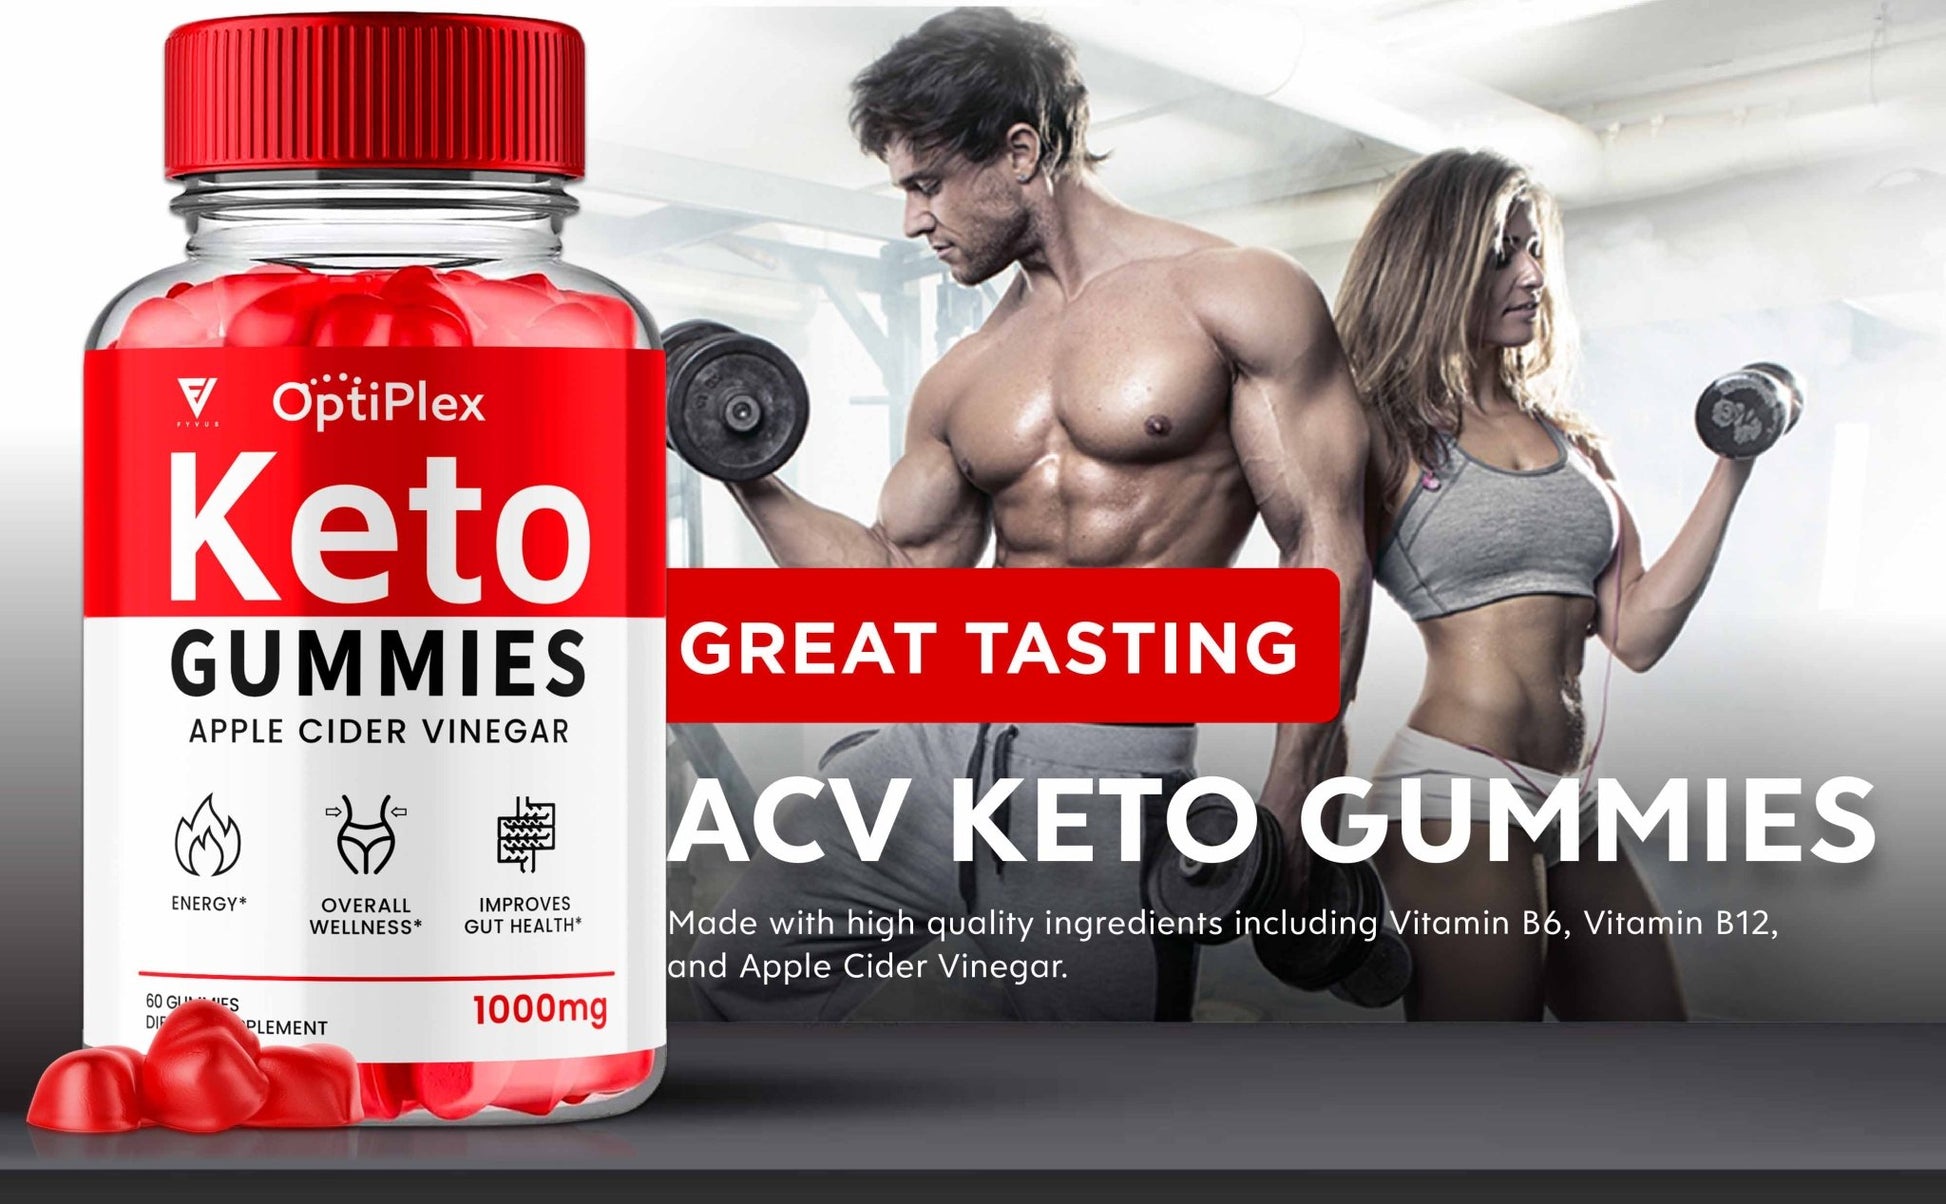 Optiplex - Keto ACV Gummies - Vitamin Place